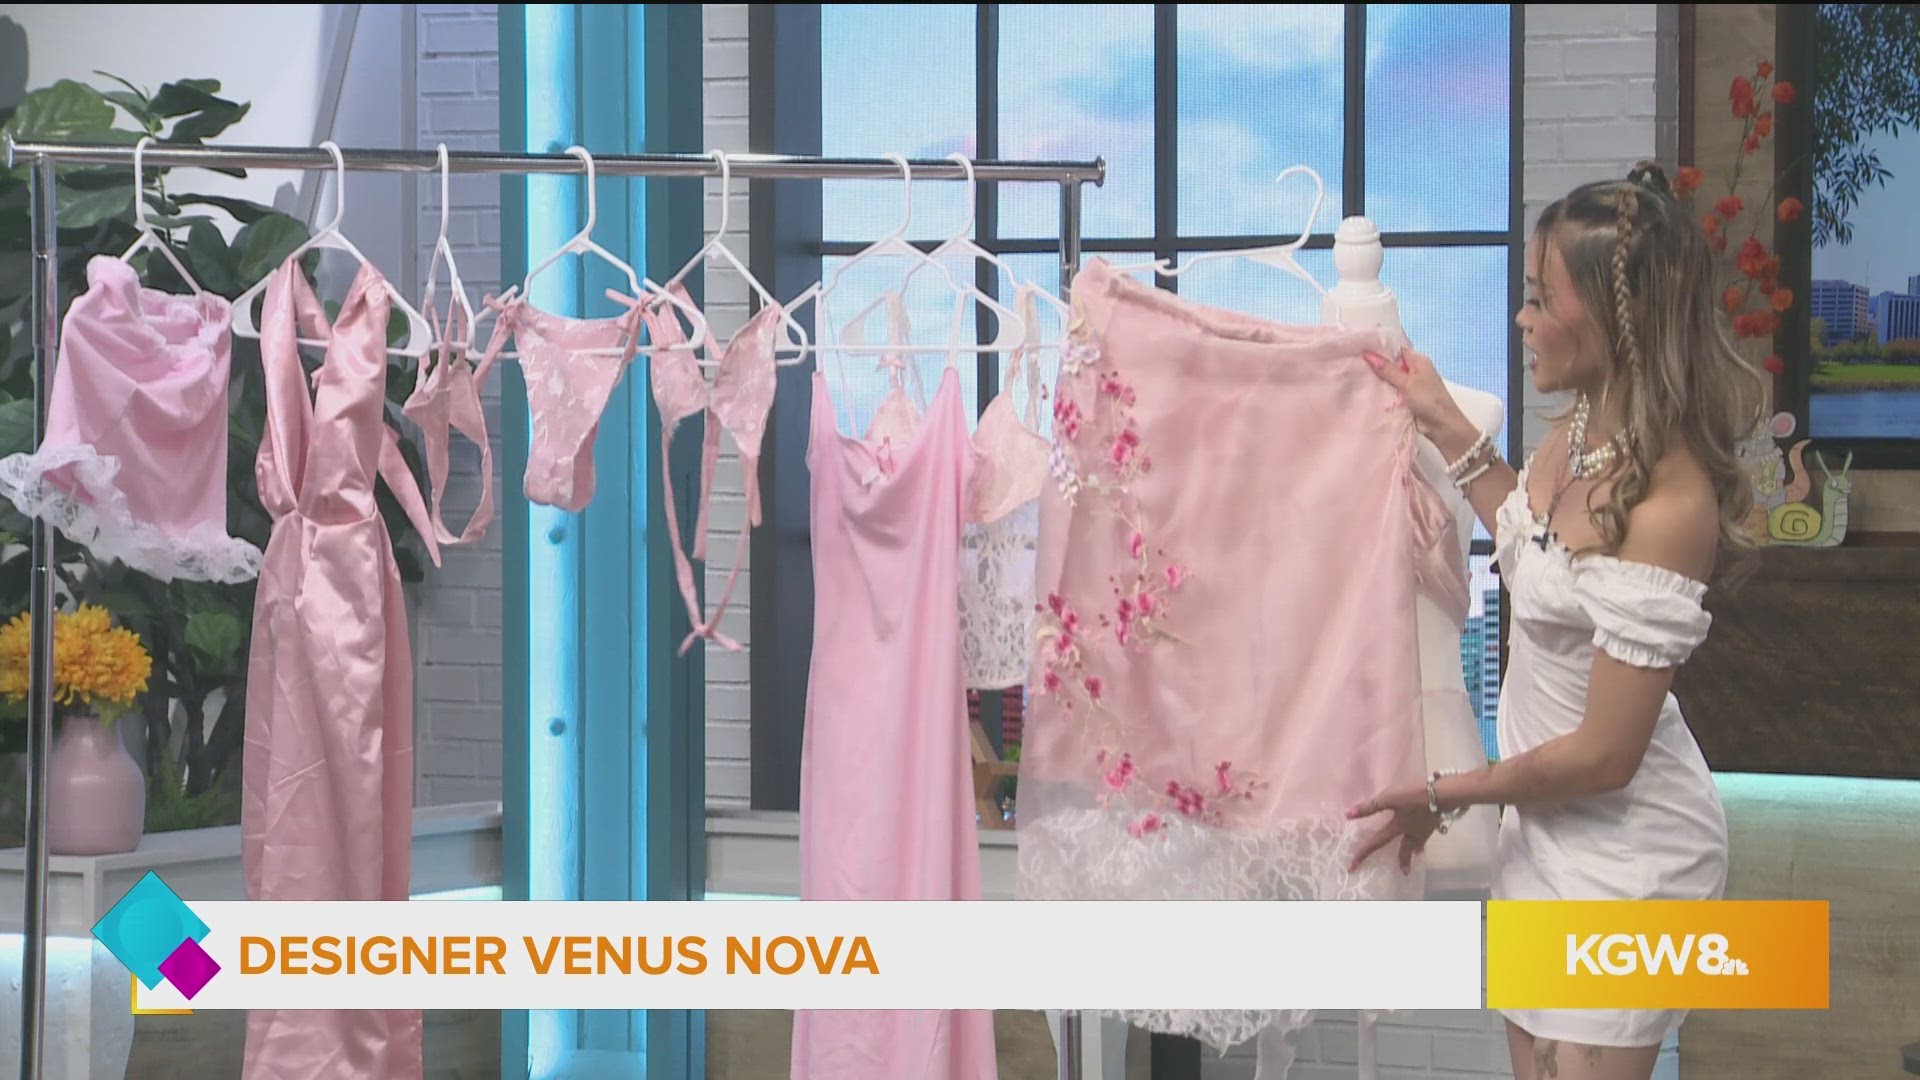 Venus Nova will participate in Portland Fashion Week, August 14 - 20